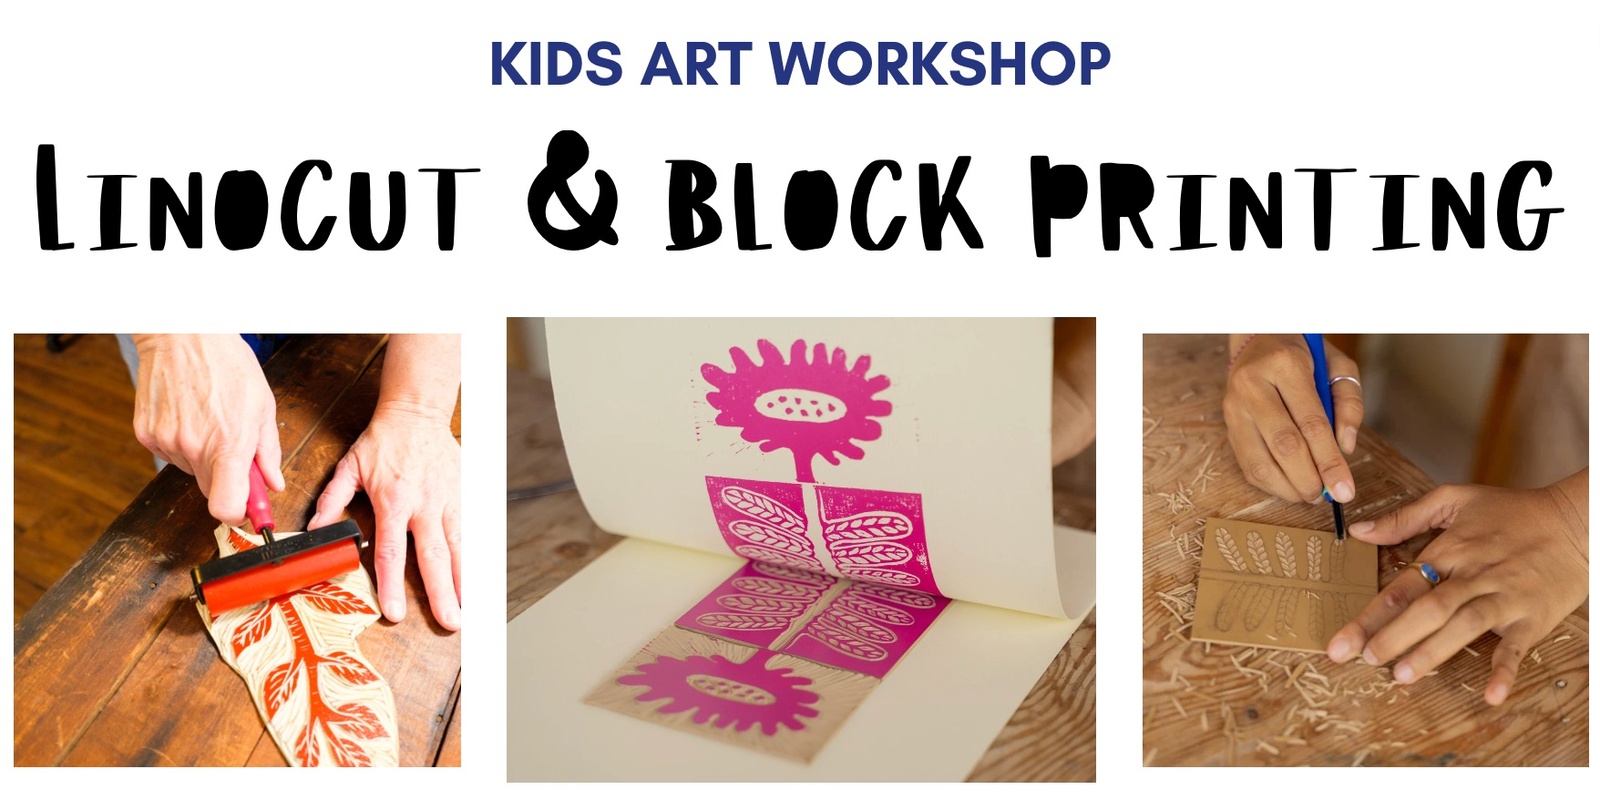 Banner image for Kids art workshop LINOCUT & BLOCK PRINTING